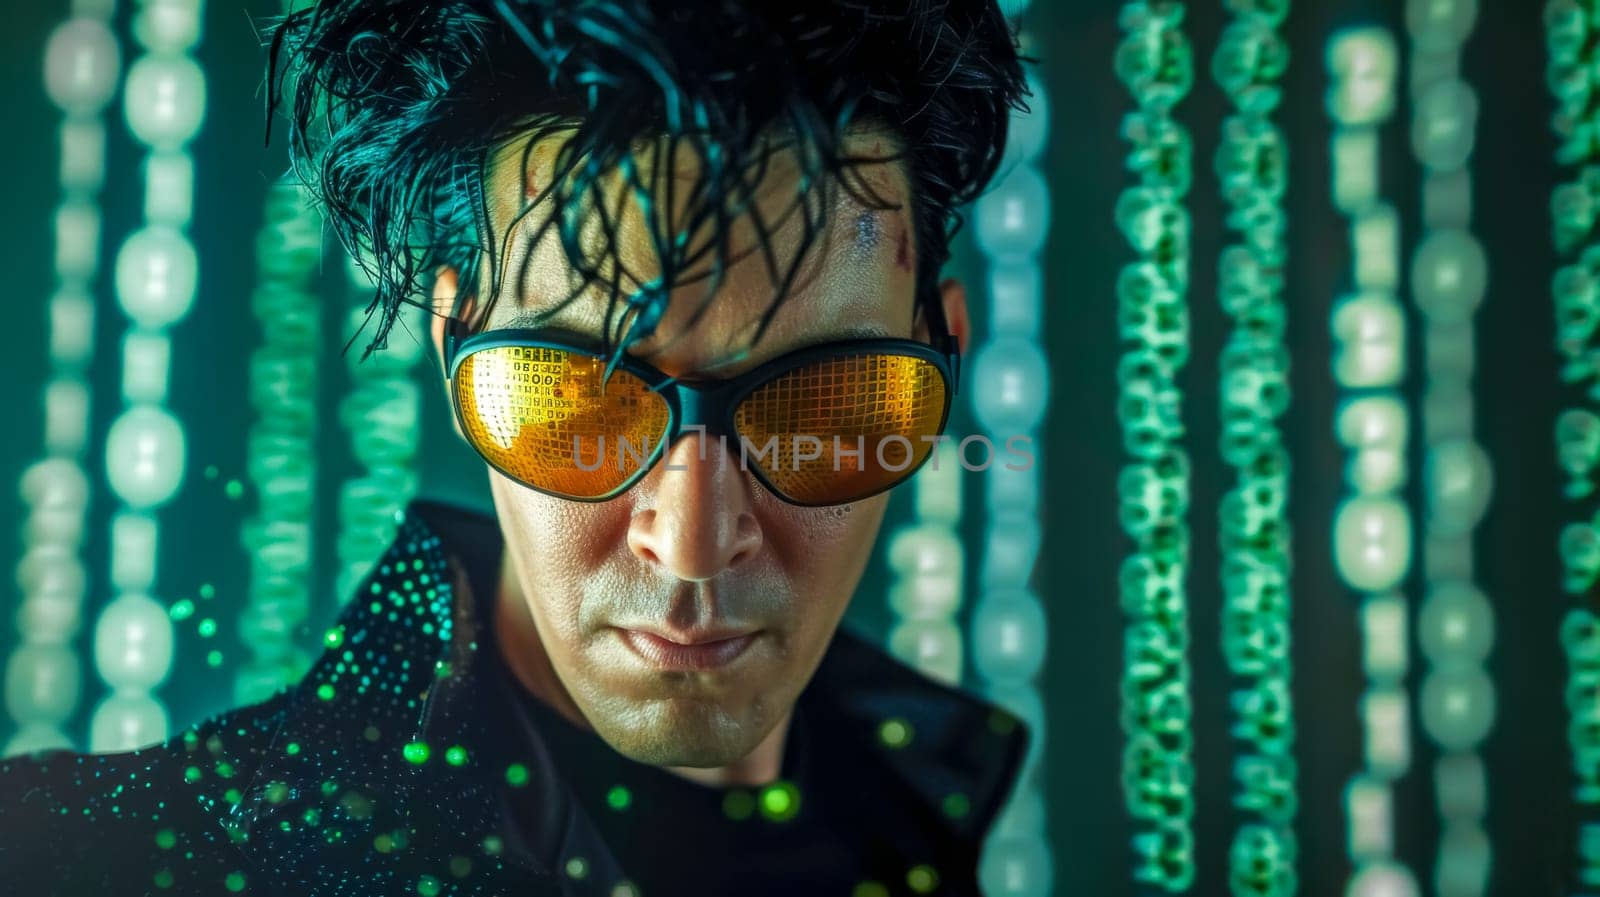 Futuristic cyberpunk portrait with high-tech sunglasses by Edophoto